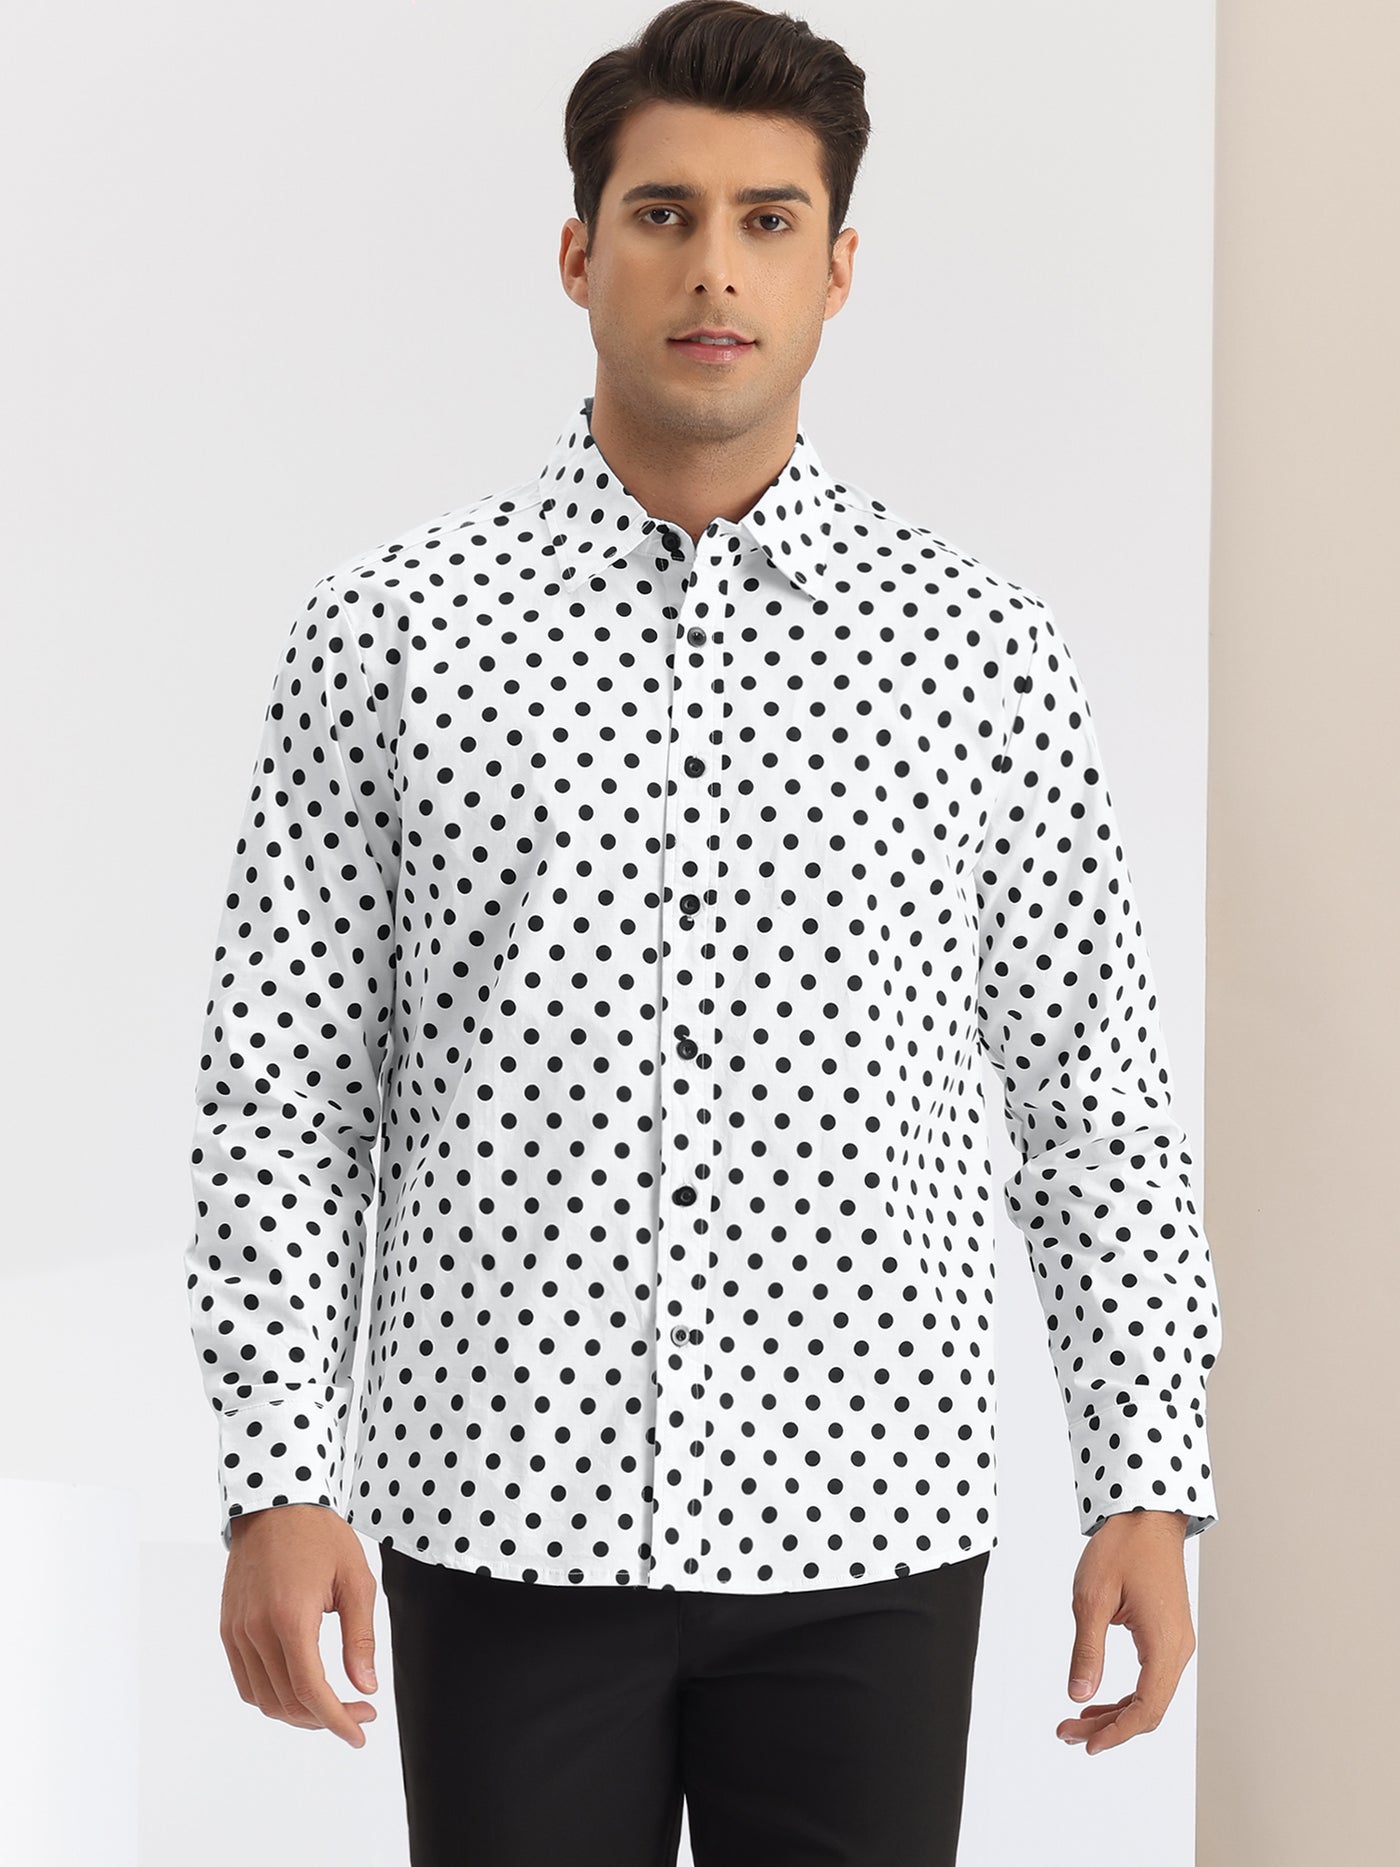 Bublédon Polka Dots Pattern Shirt for Men's Long Sleeves Color Block Business Shirts